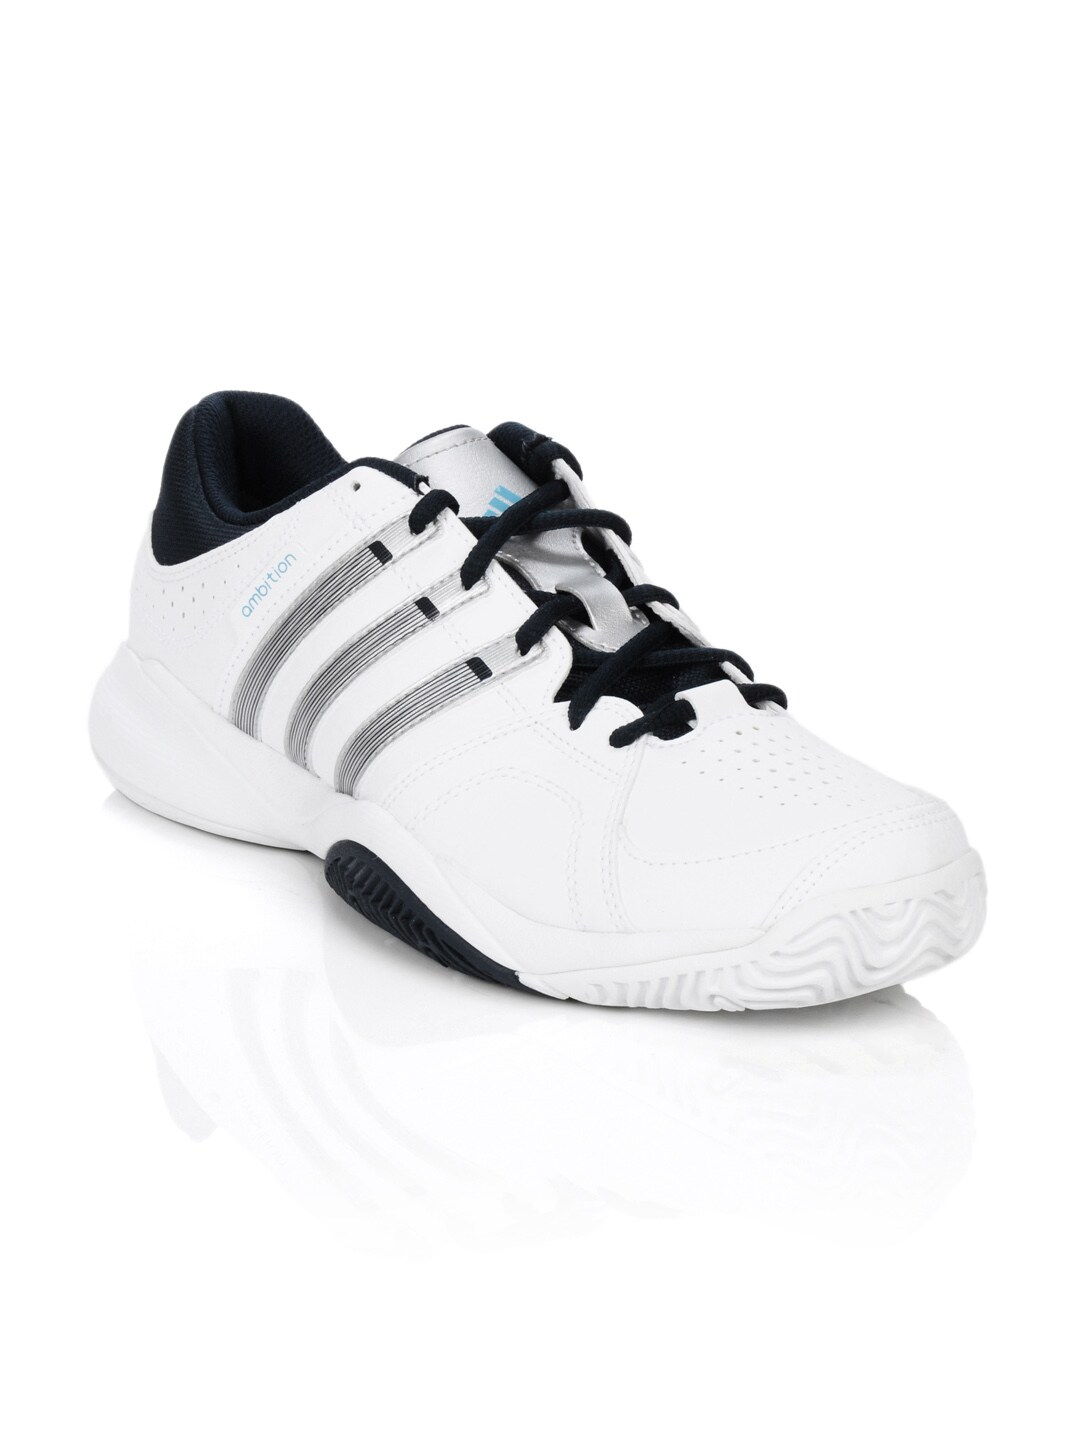 ADIDAS Men Ambition VII Stripes White Sports Shoes